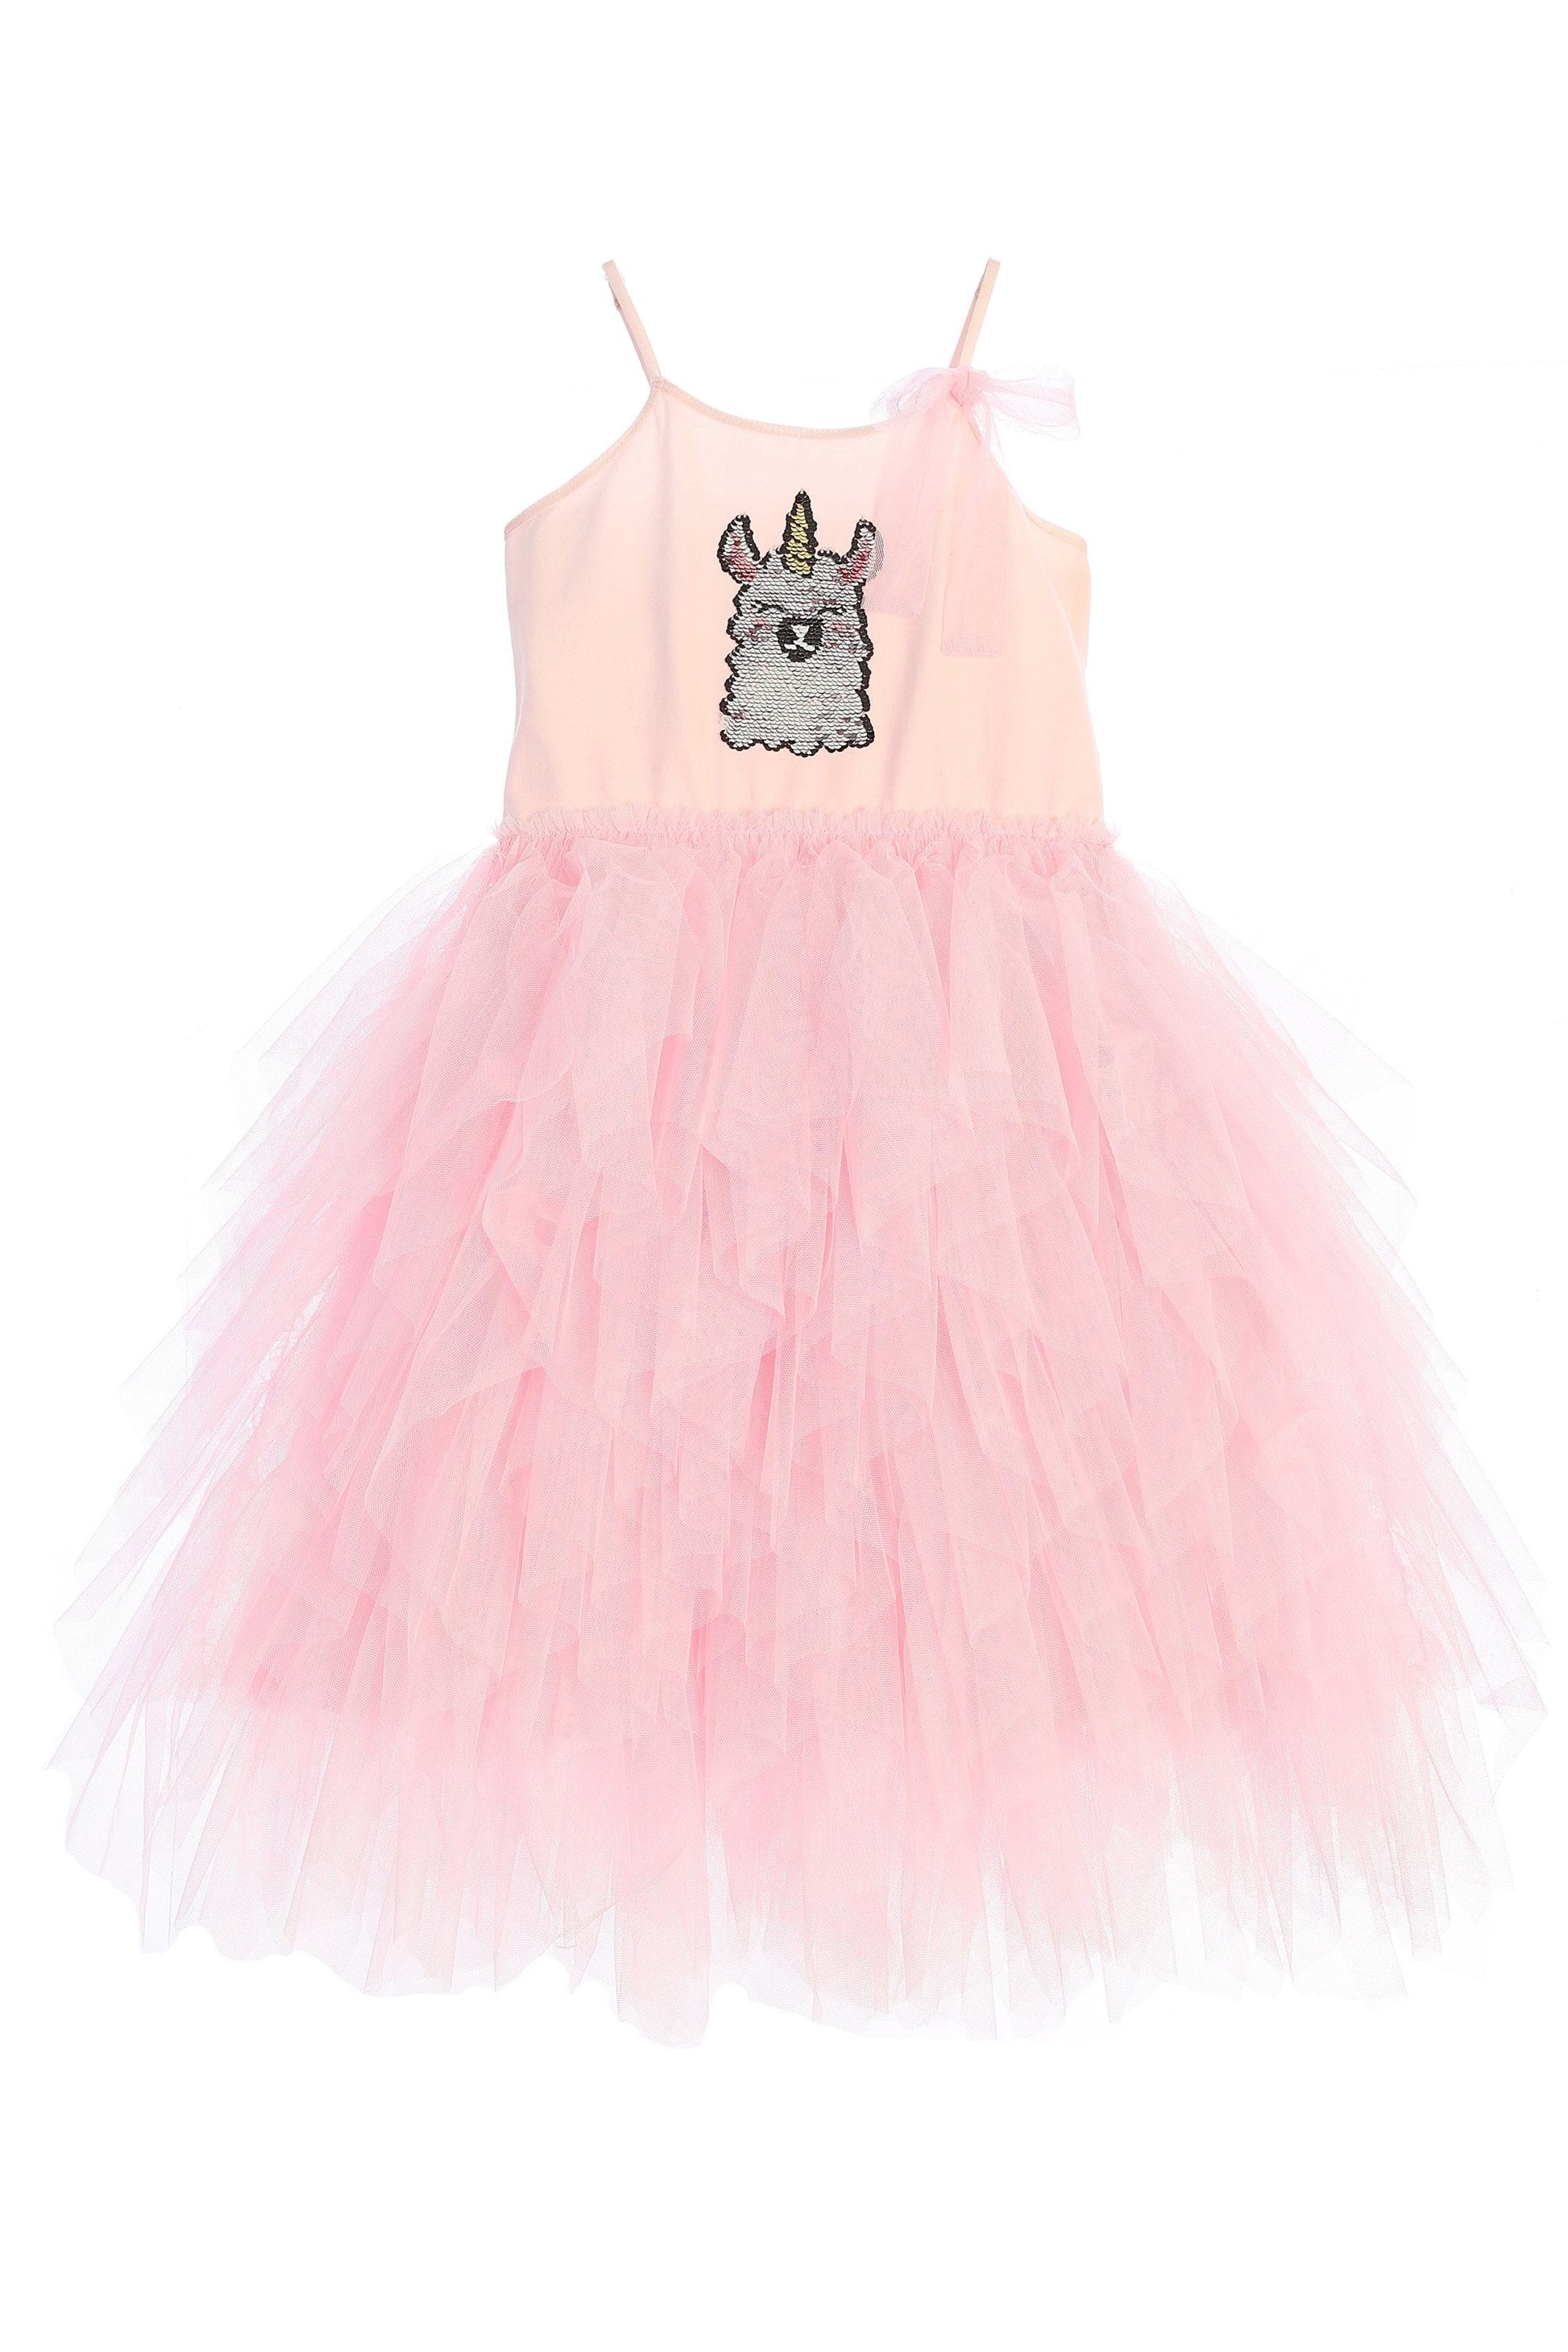 Tutu Dress - Llama-corn Flip Sequin Tutu Dress